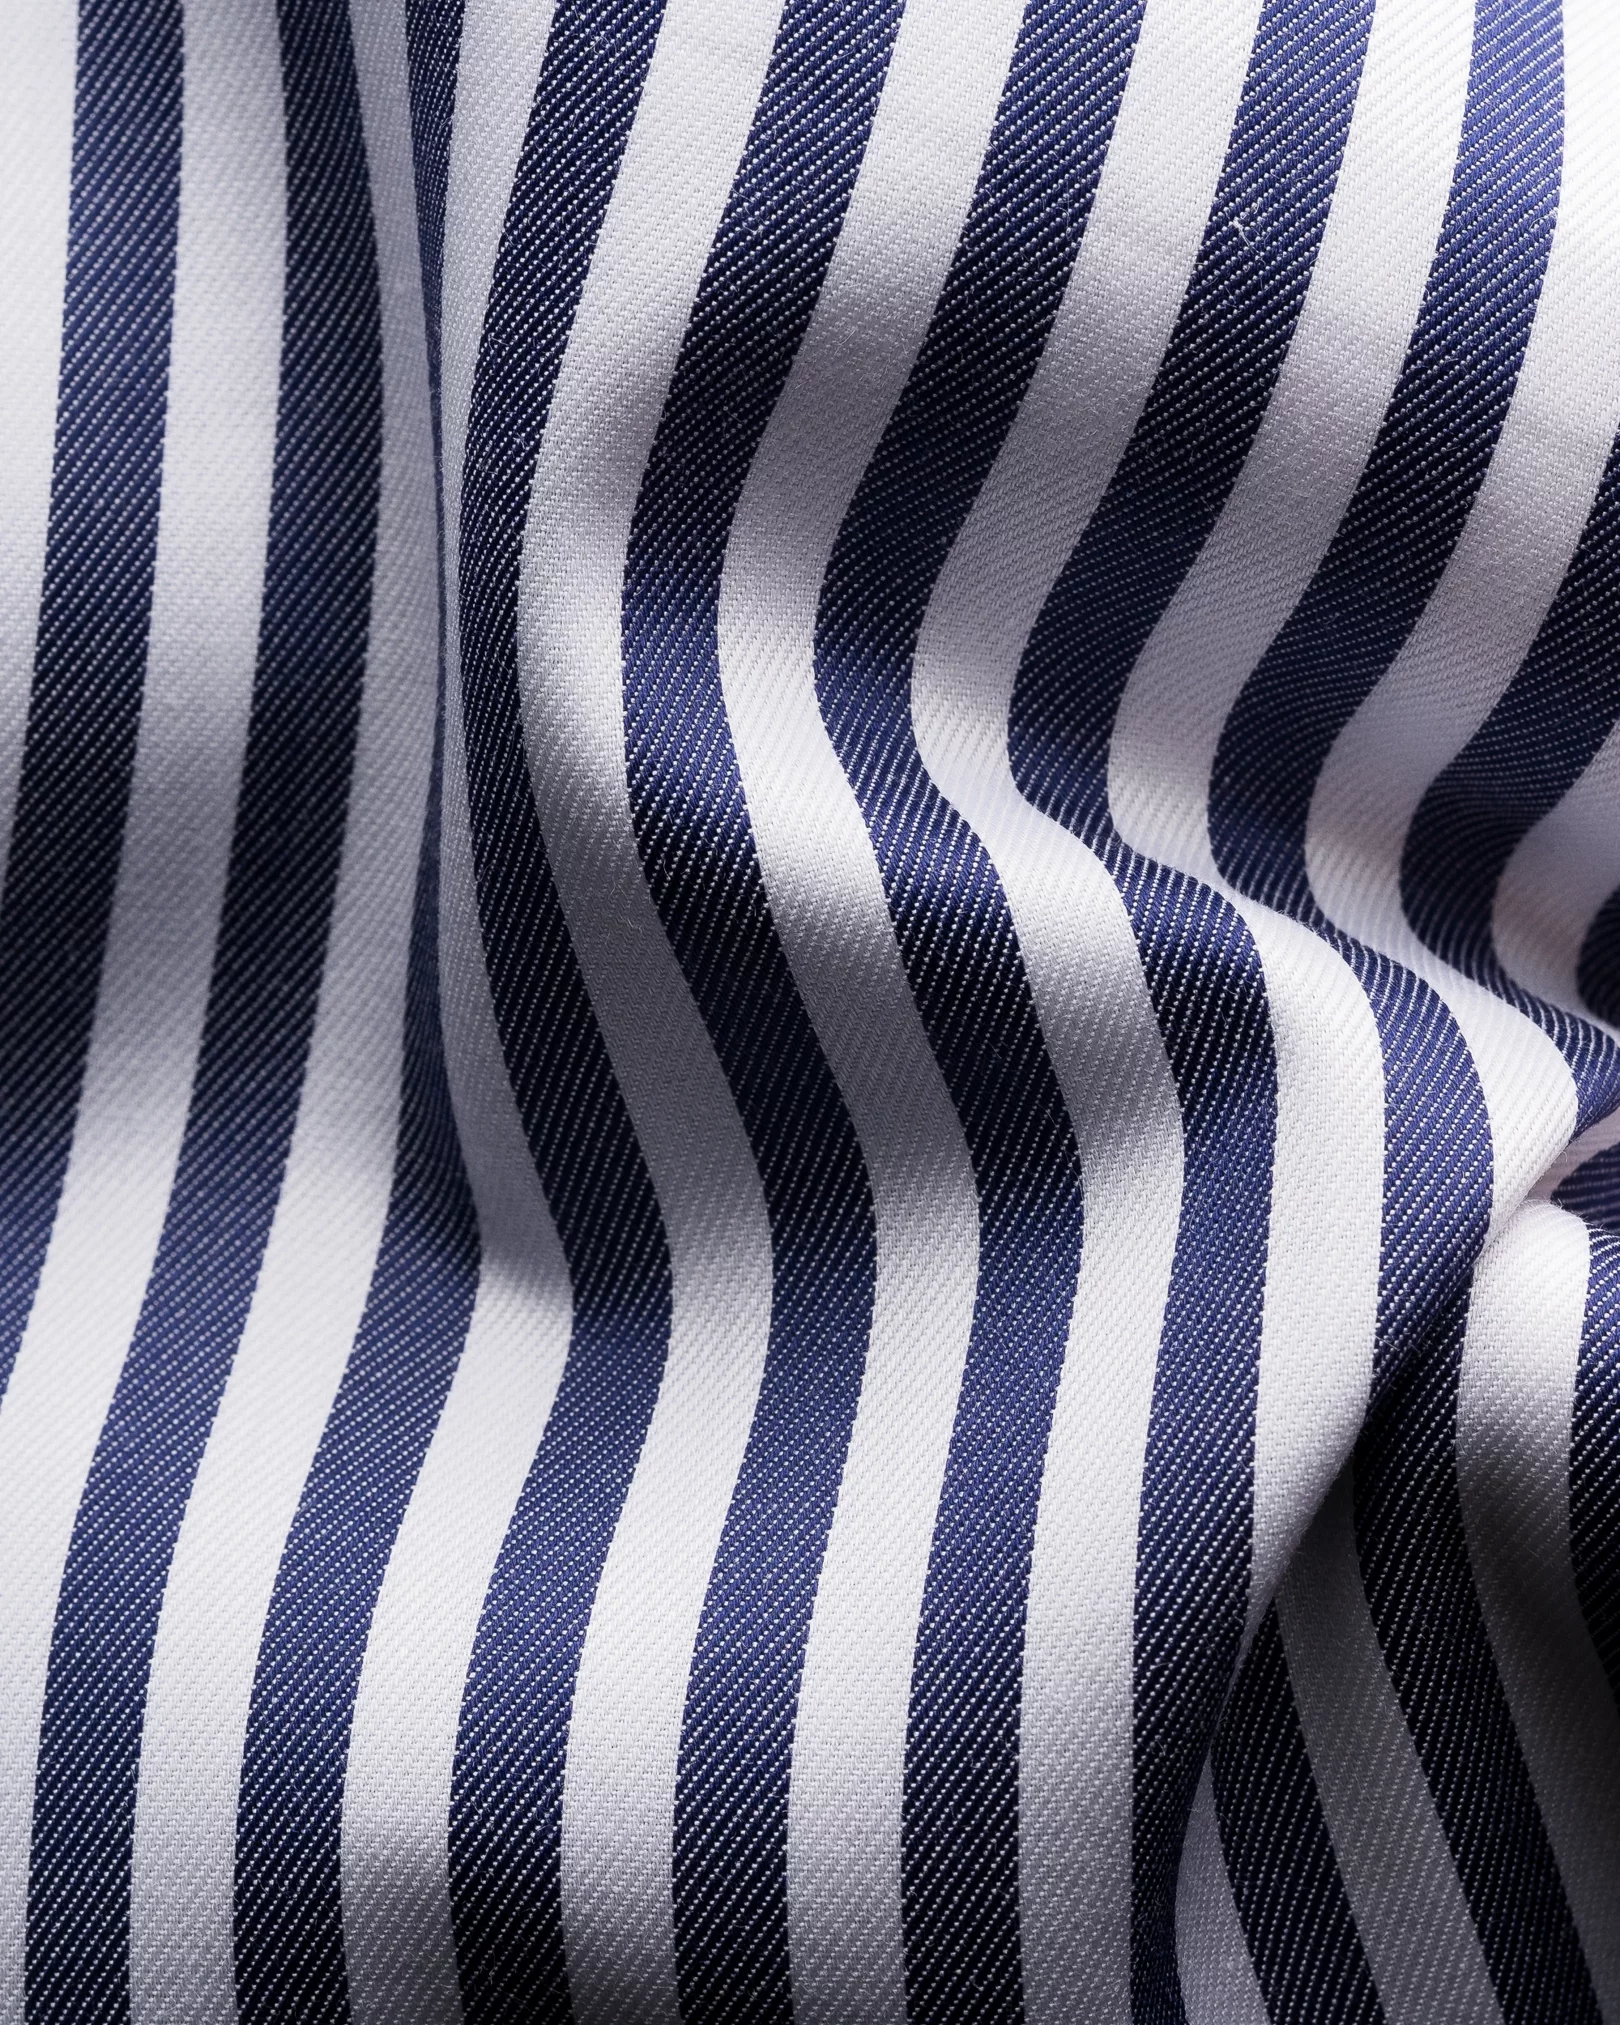 Eton - navy blue signature twill archive stripe